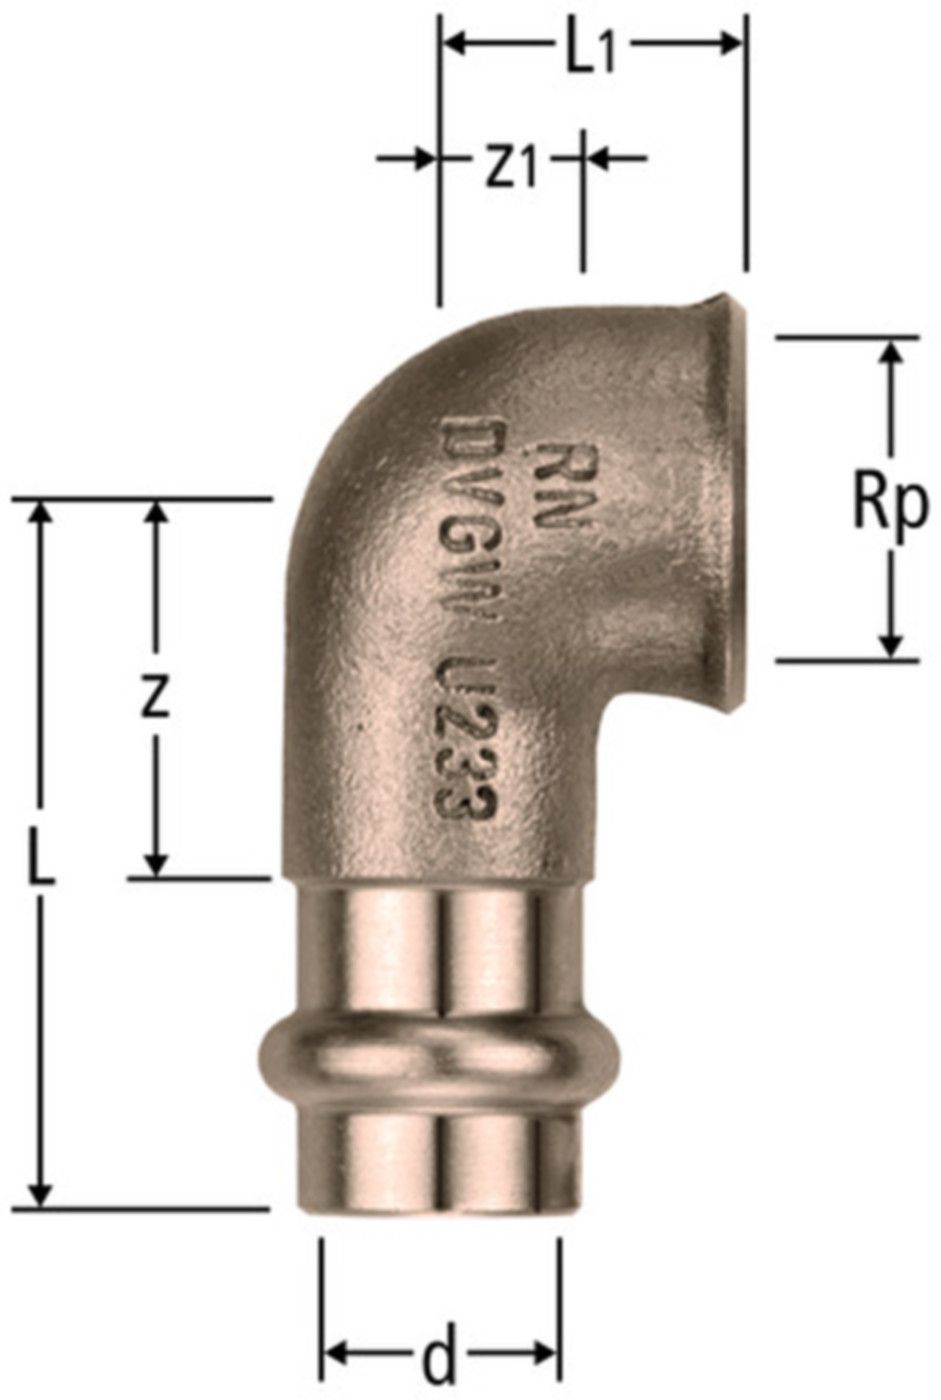 Winkel mit IG 22 x 1/2" 81006.24 - Nussbaum-Optipress-Rotguss-Fittings